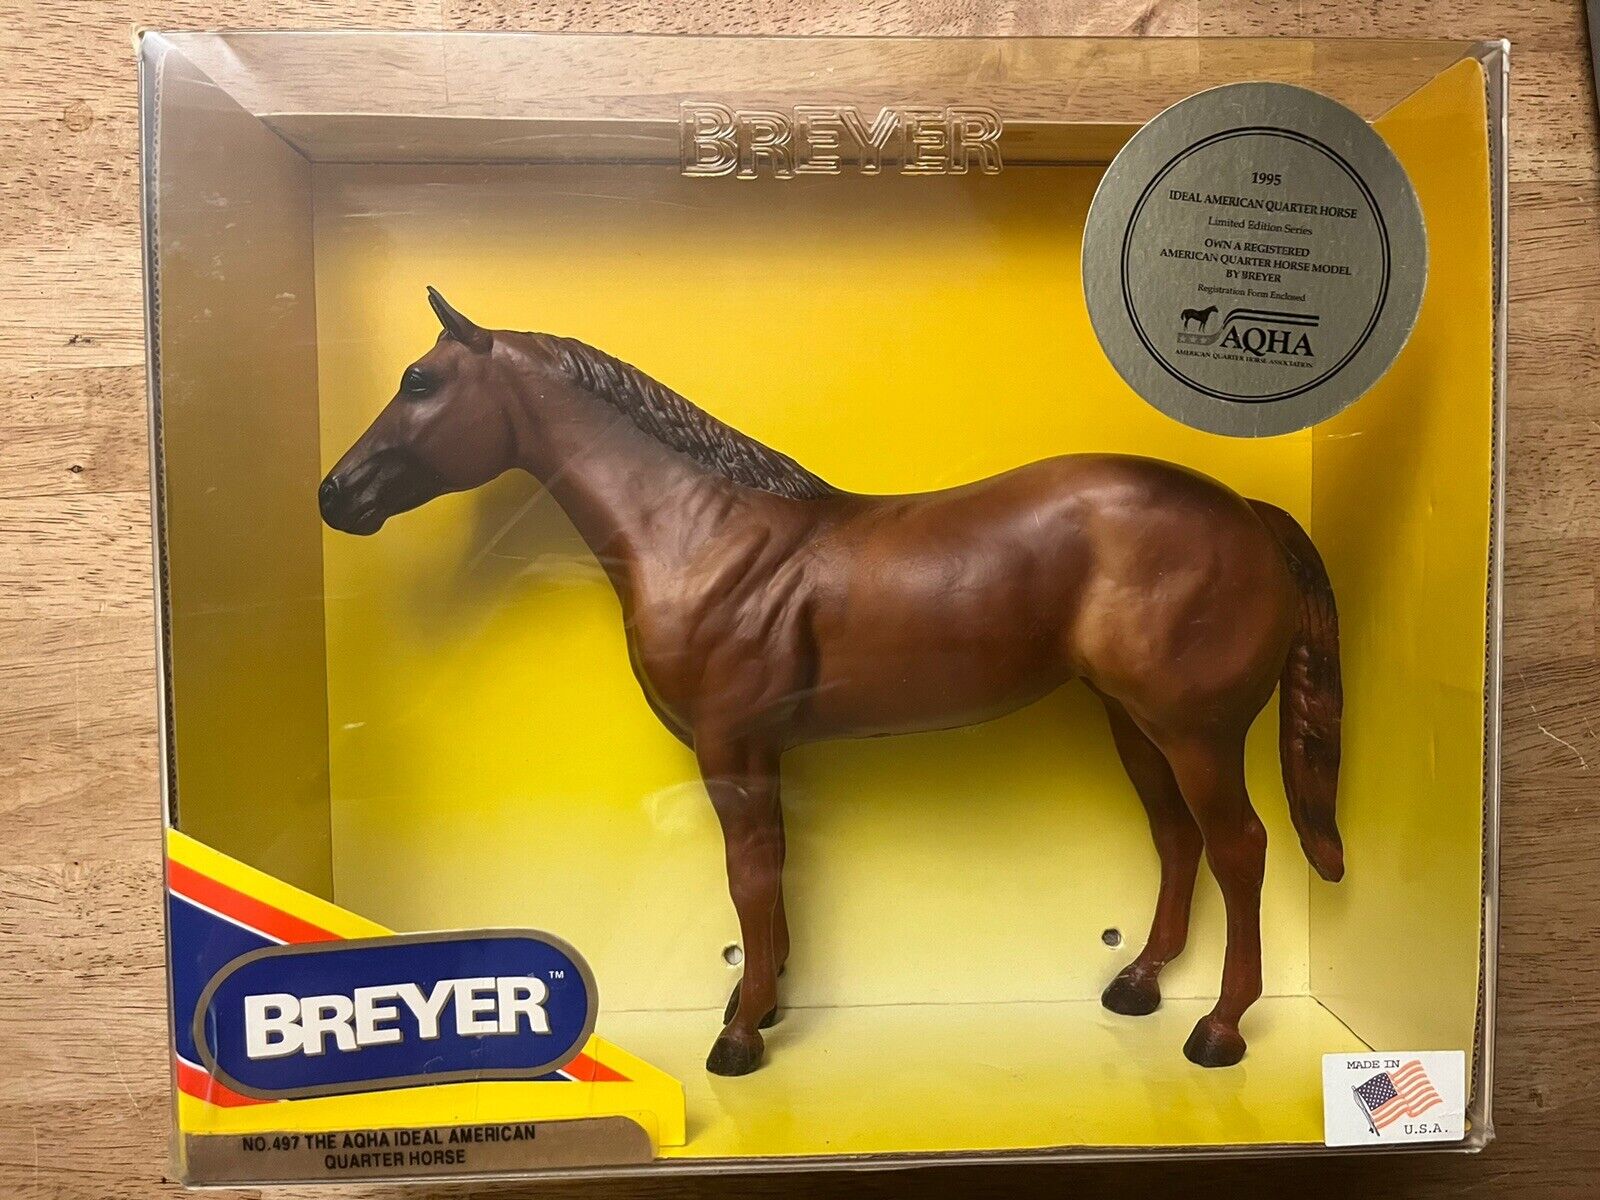 Breyer AQHA Ideal American Quarter Horse Figurine, #497, Loose In Box